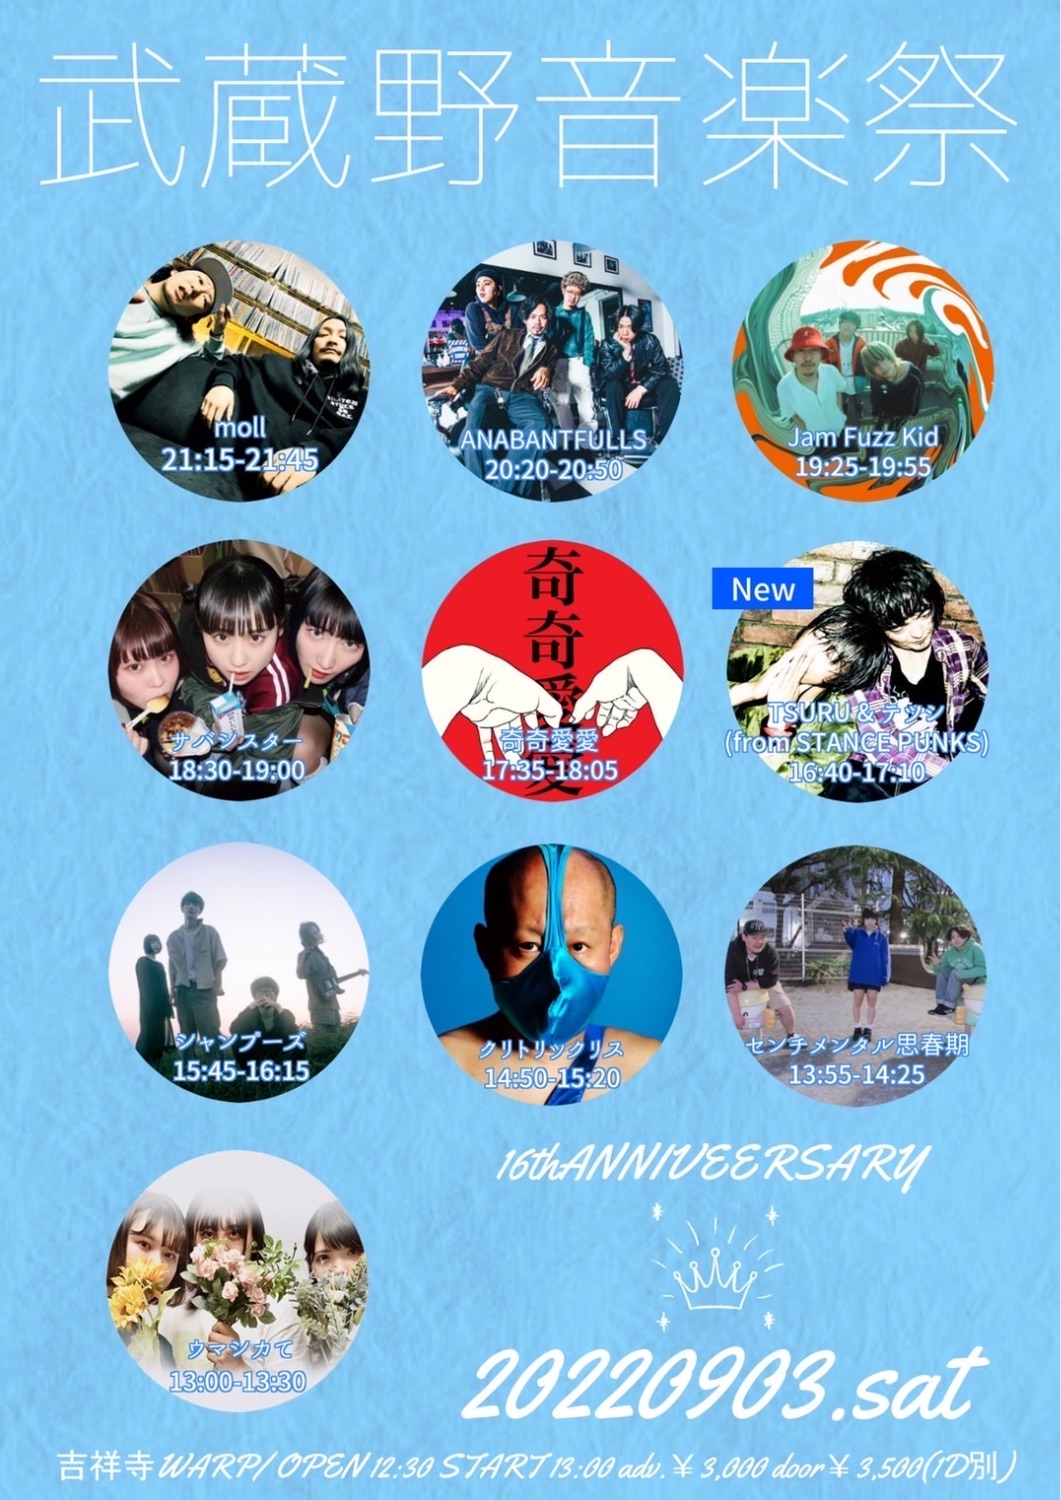 武蔵野音楽祭 16thANNNIVEERSARY